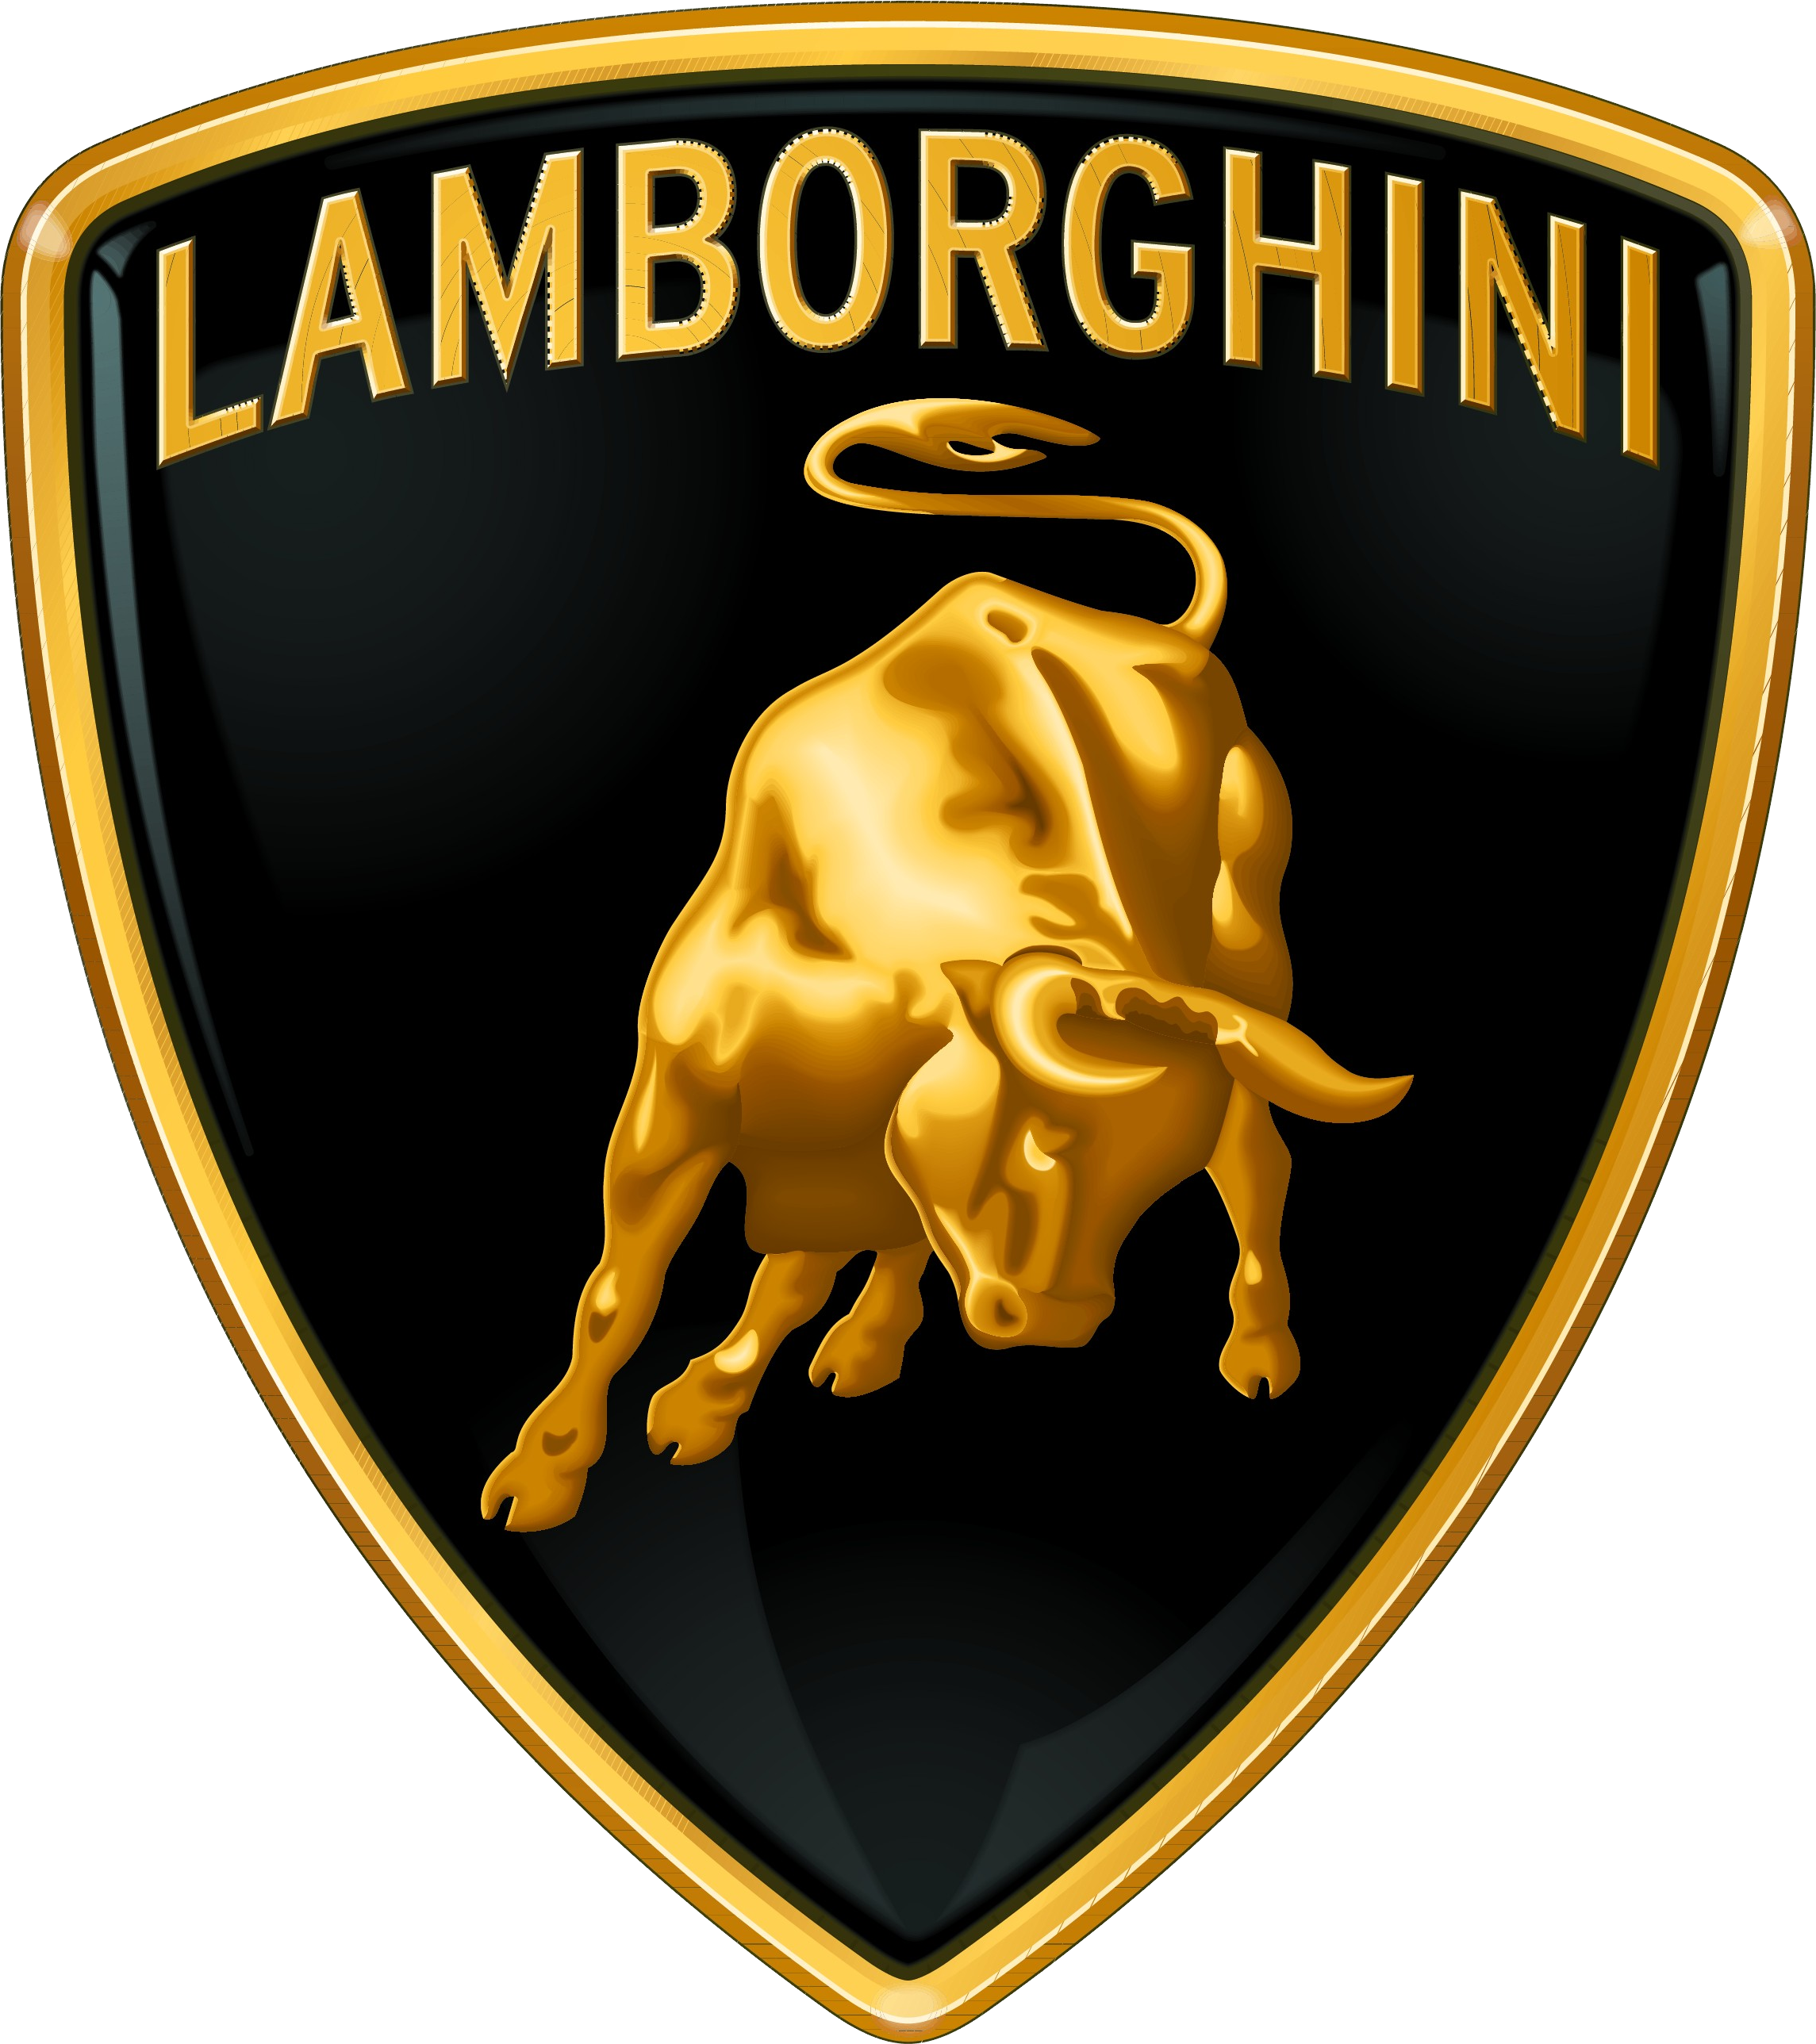 Lamborghini-Logo